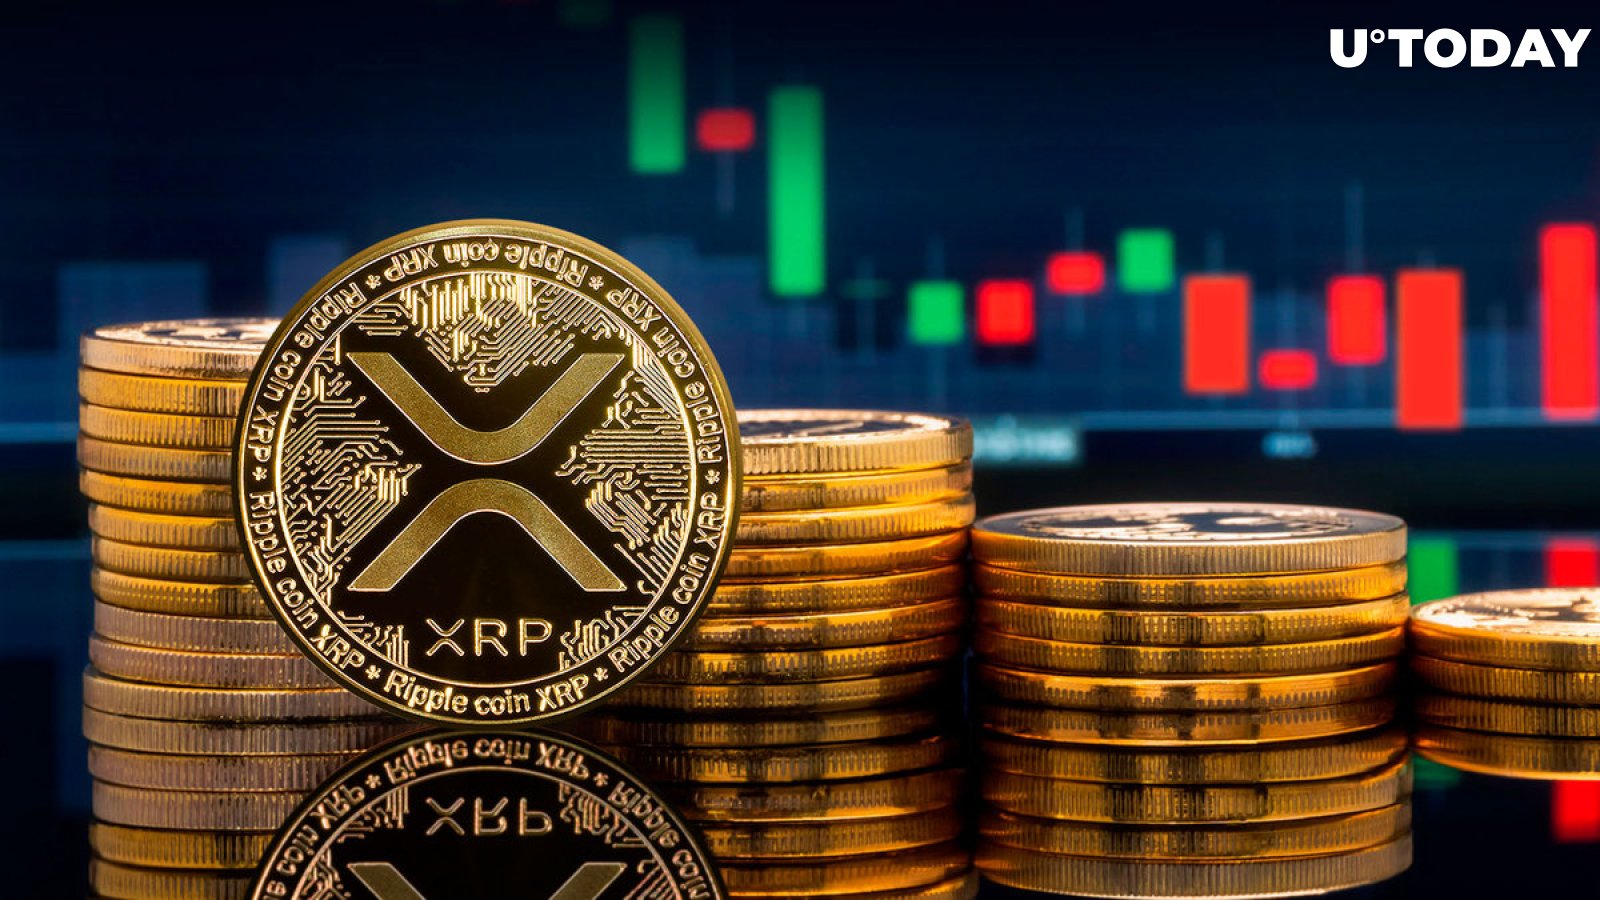 XRP to Drop Below $0.5? Price's Unexpected Move